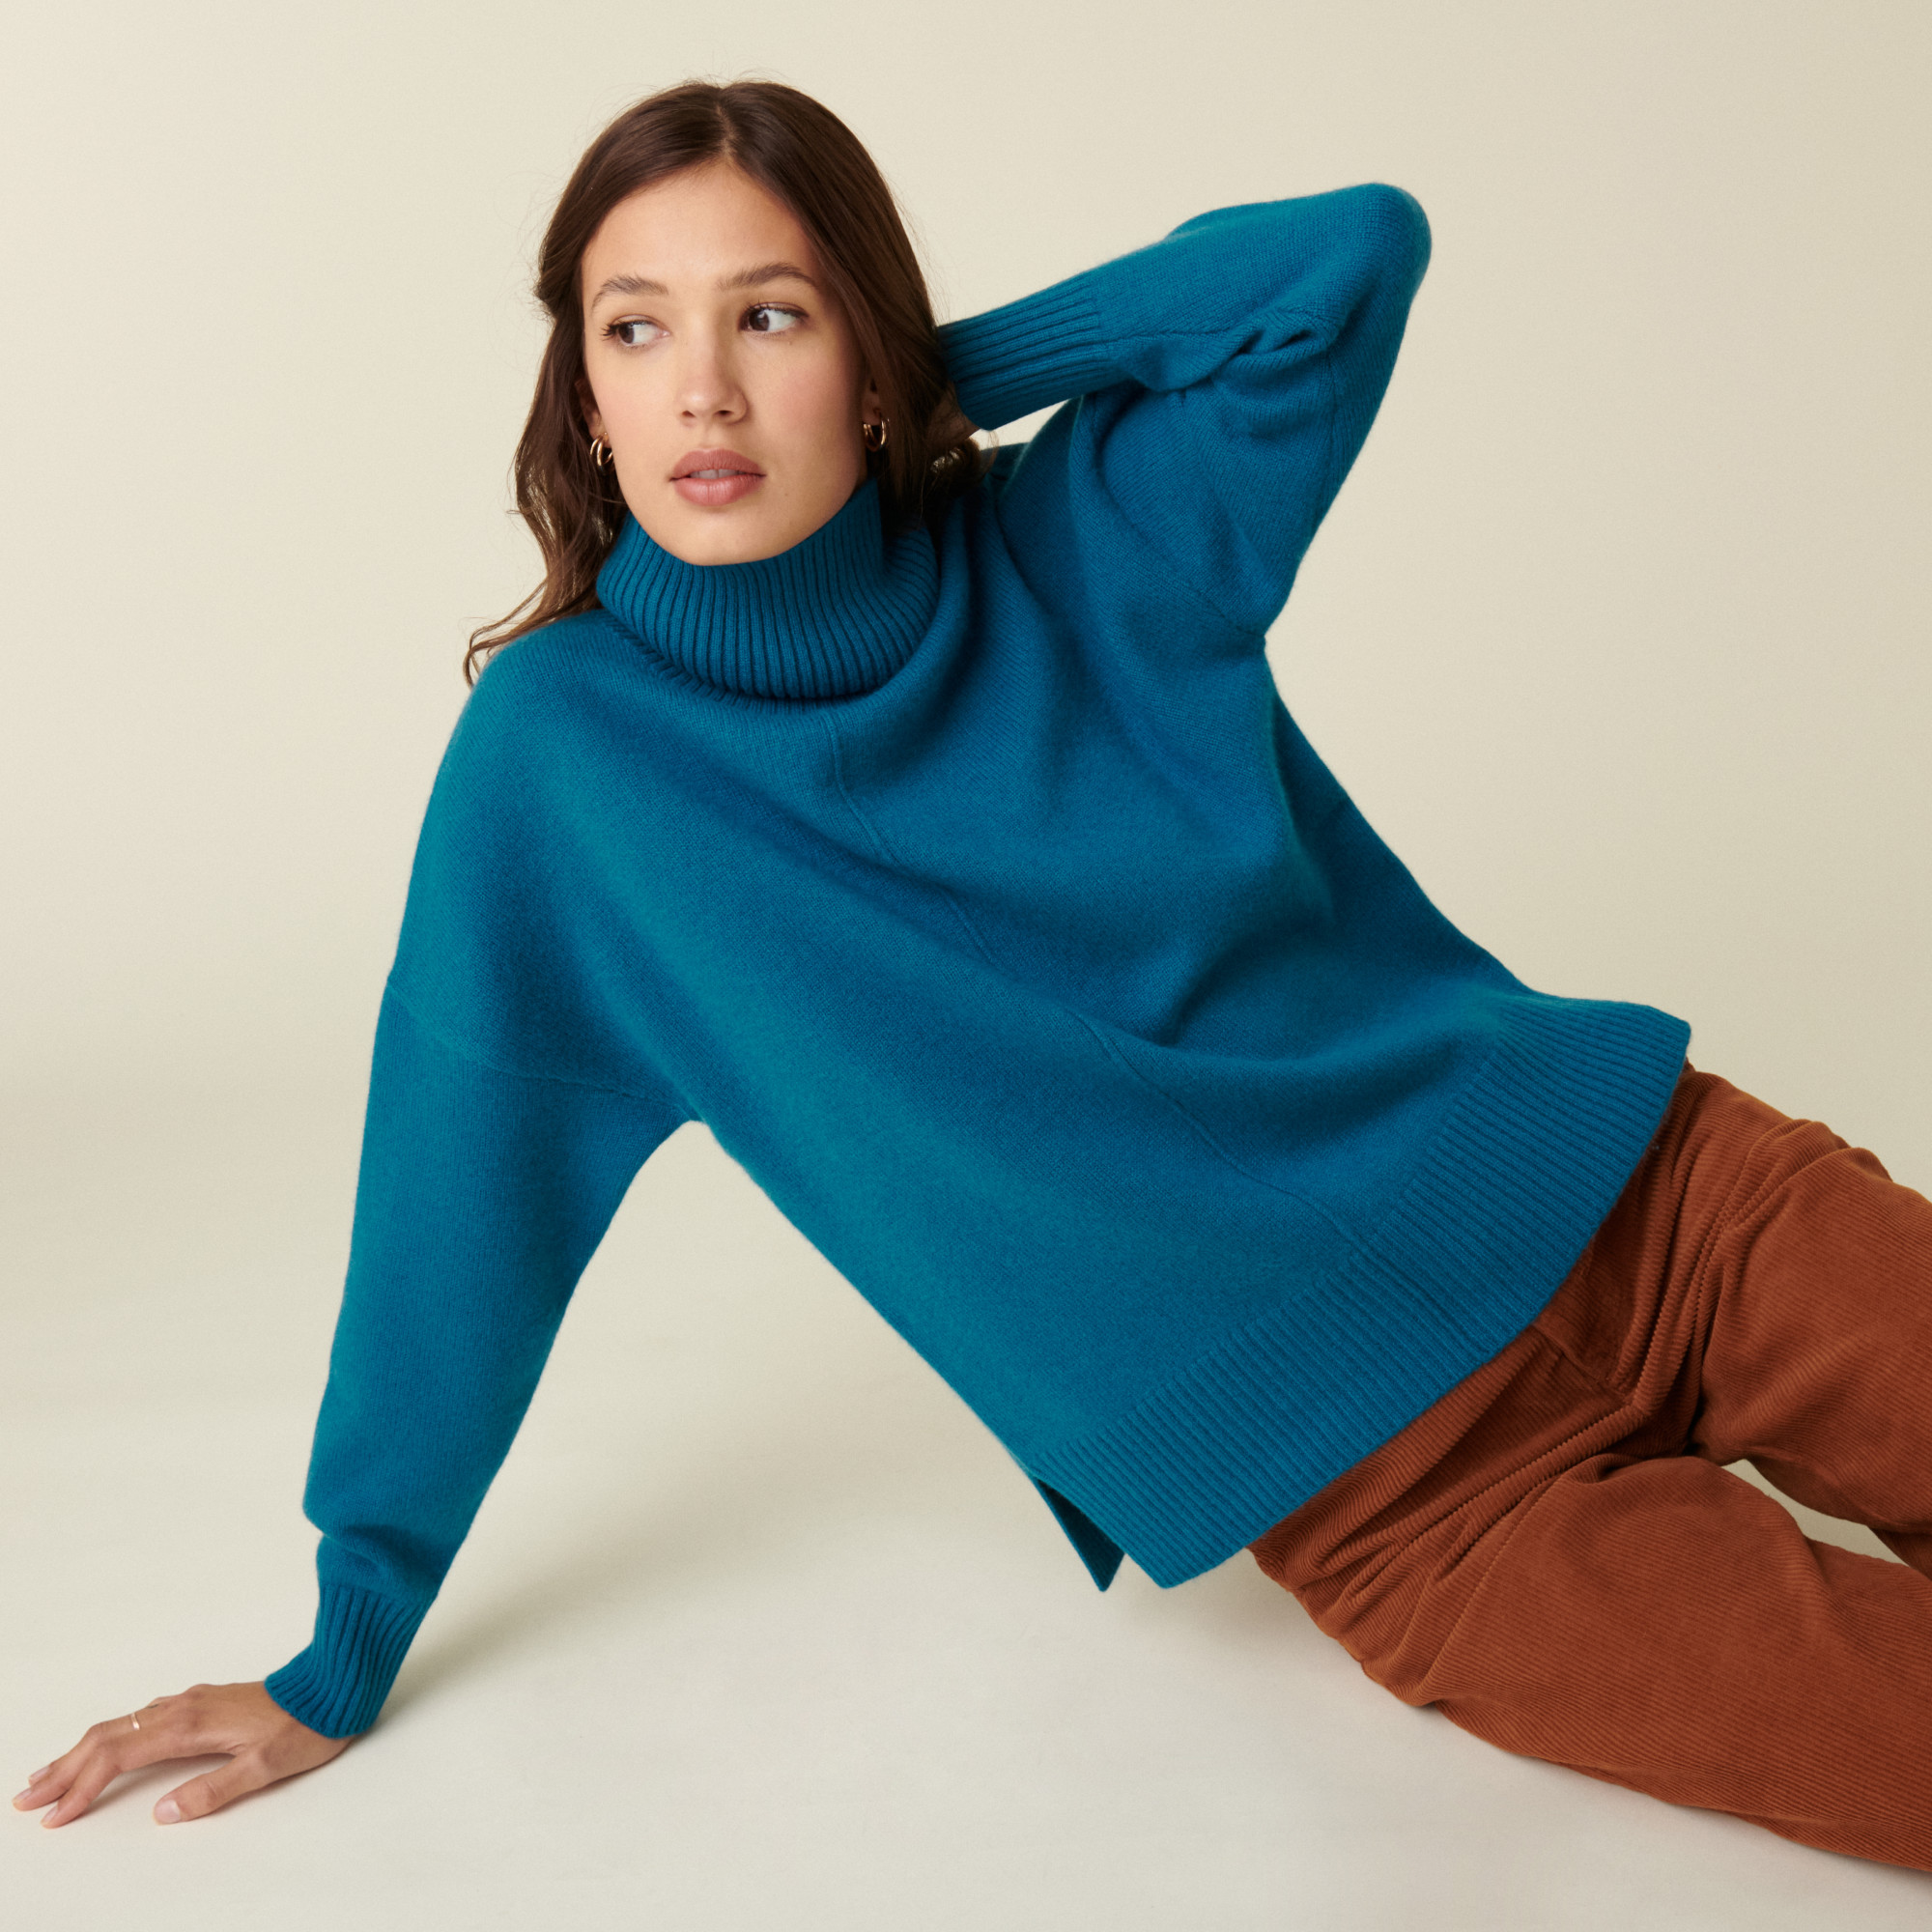 4-ply cashmere turtleneck sweater - Adena